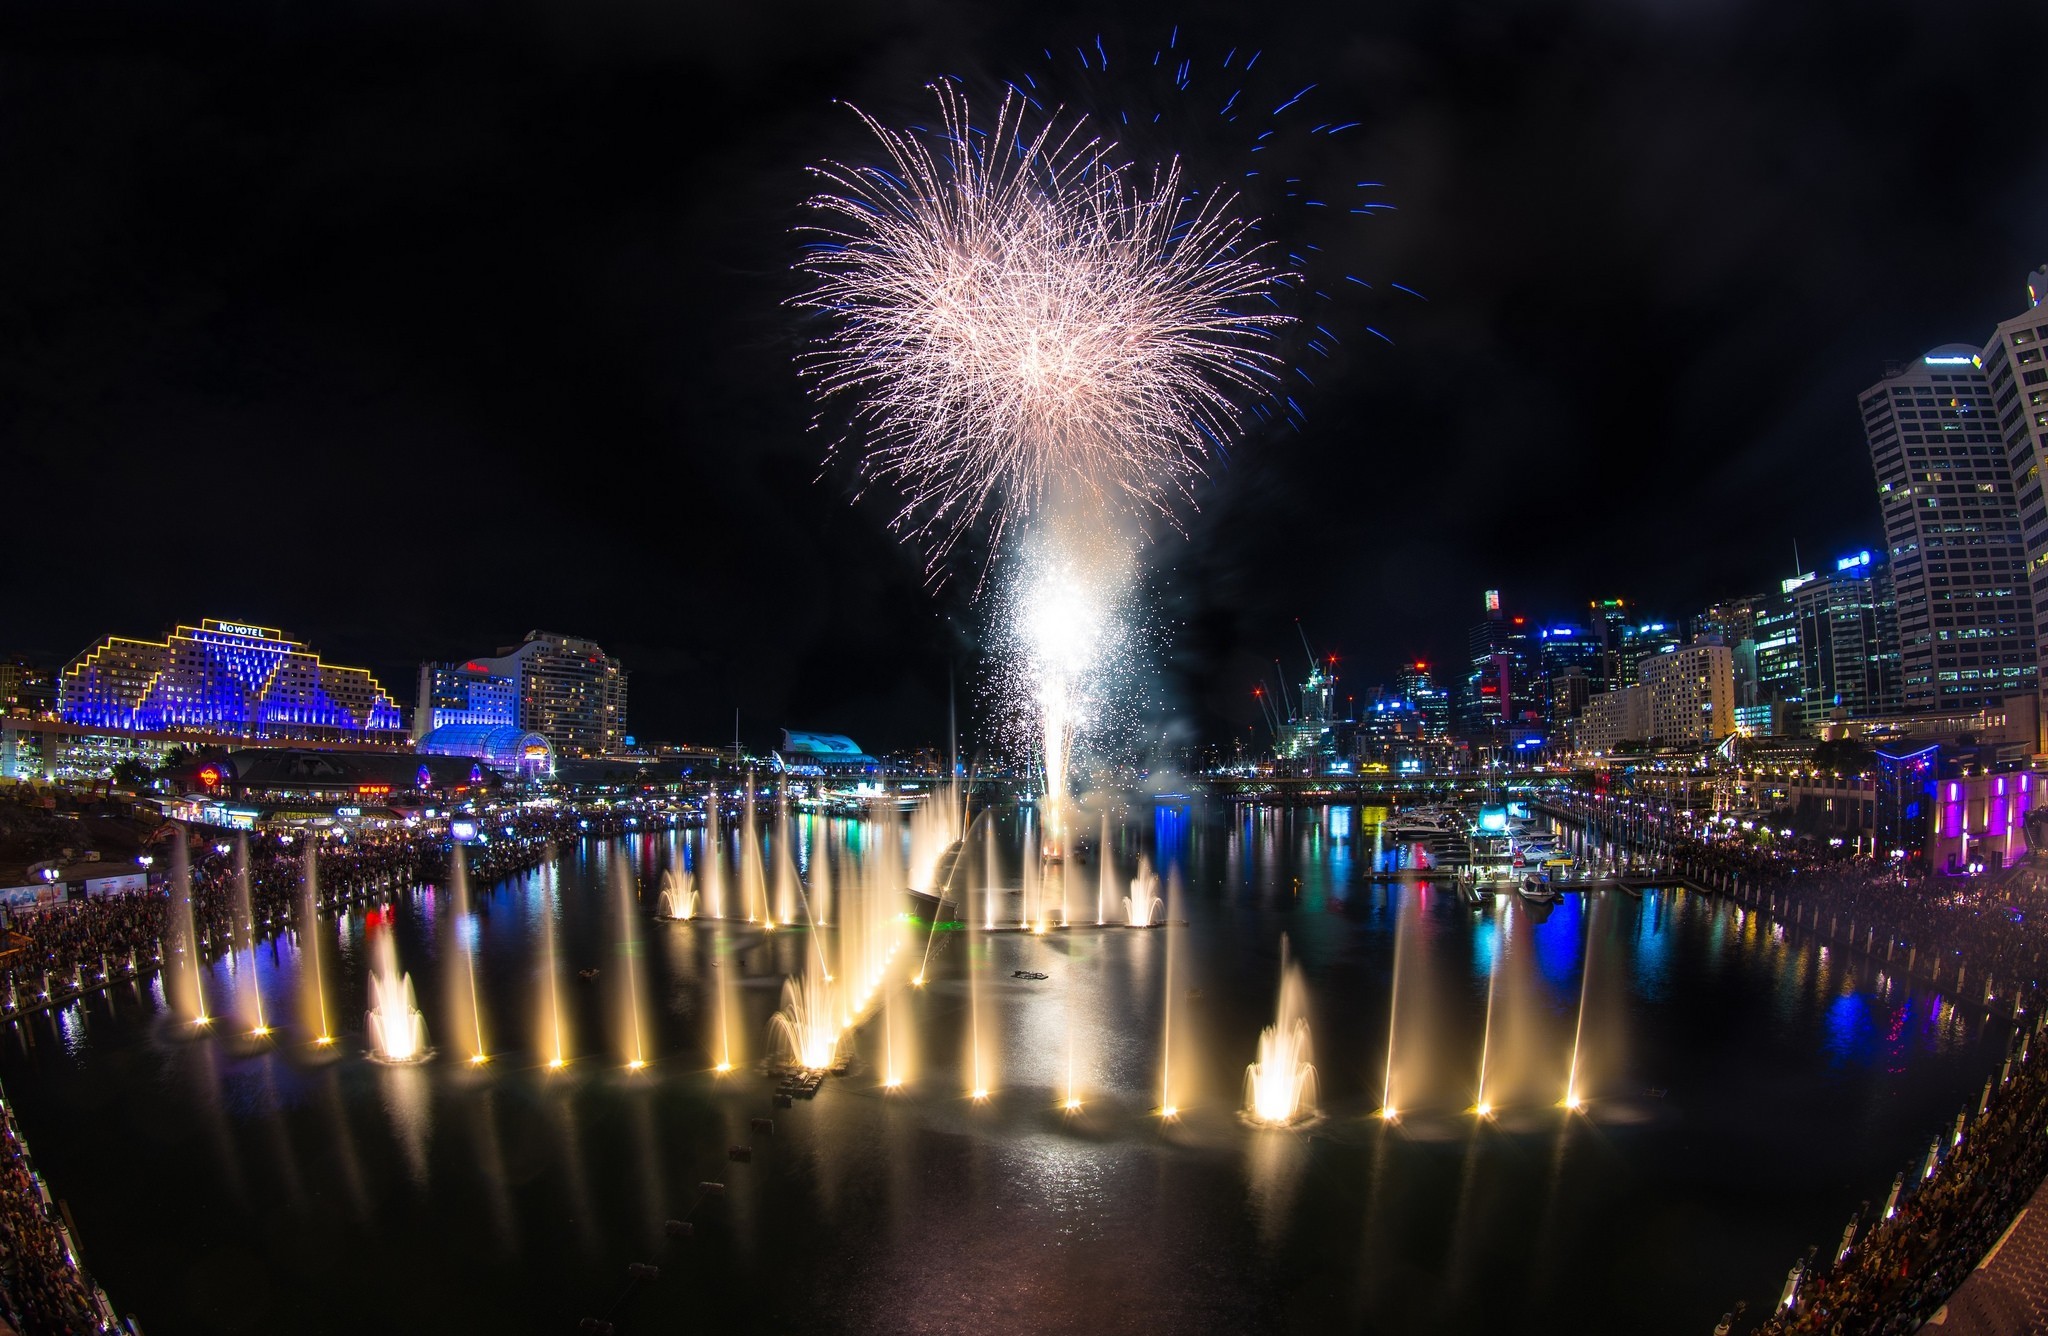 man made, darling harbour, australia, fireworks, fountain, sydney High Definition image